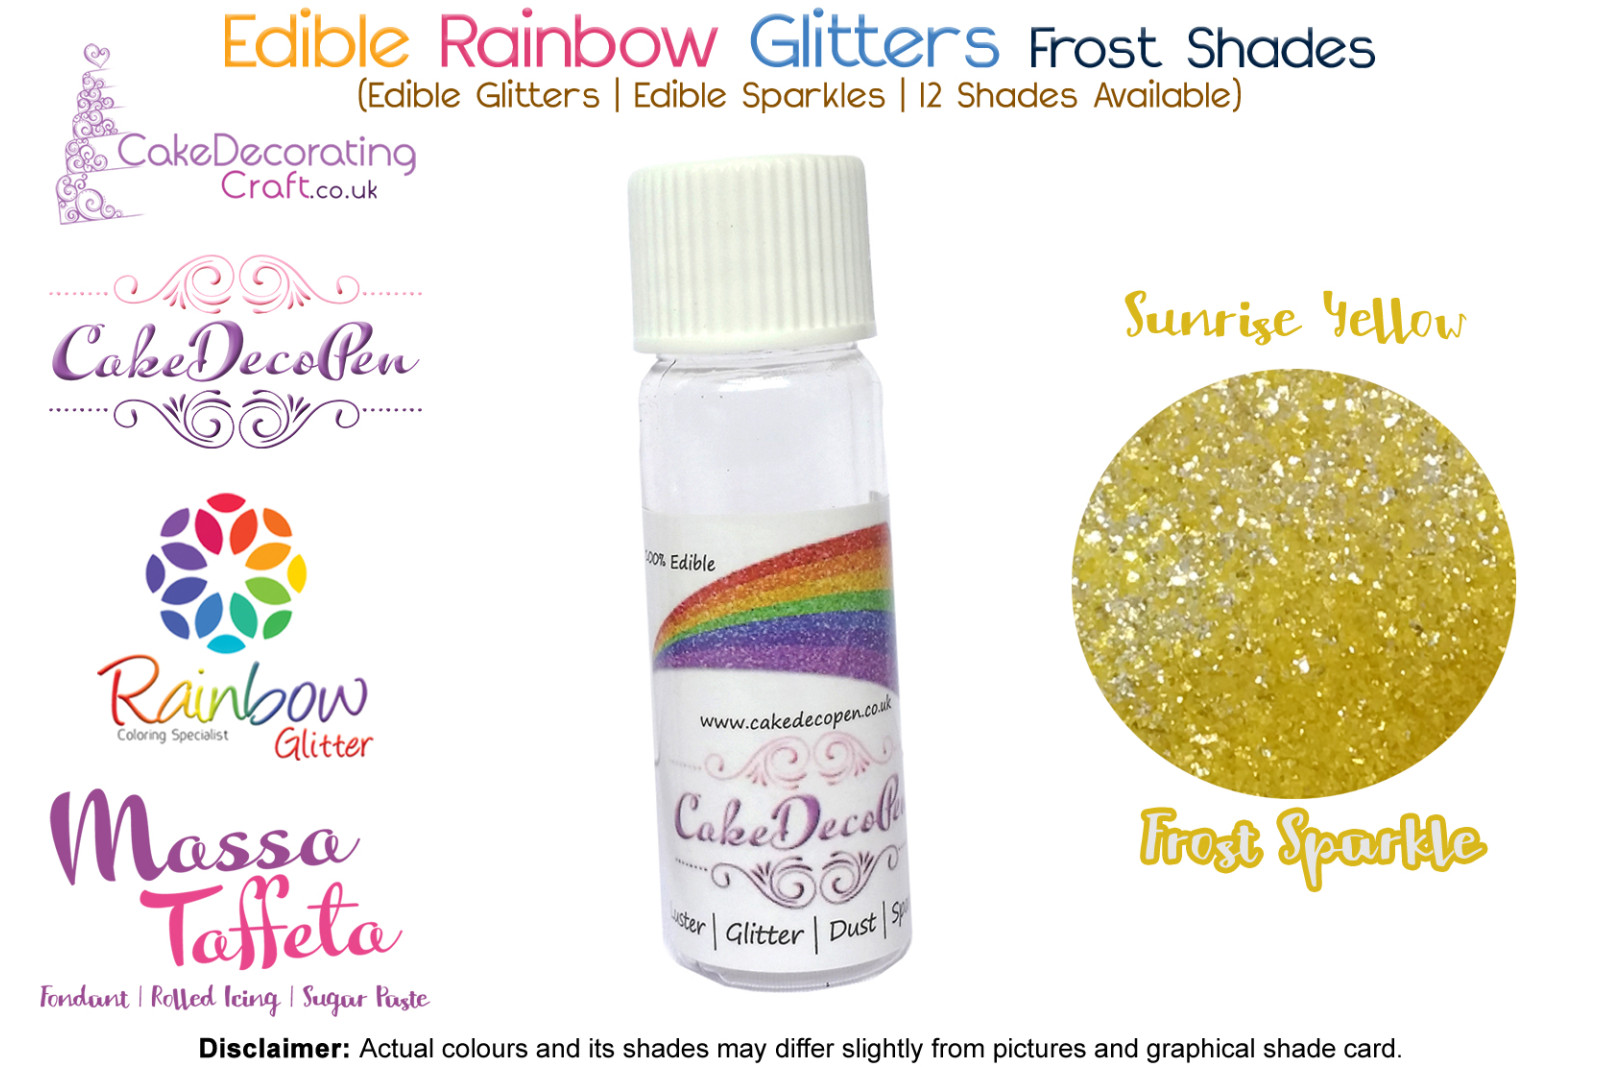 Sunrise Yellow | Rainbow Glitter | Frost Shade | 100 % Edible | Cake Decorating Craft | 8 Grams